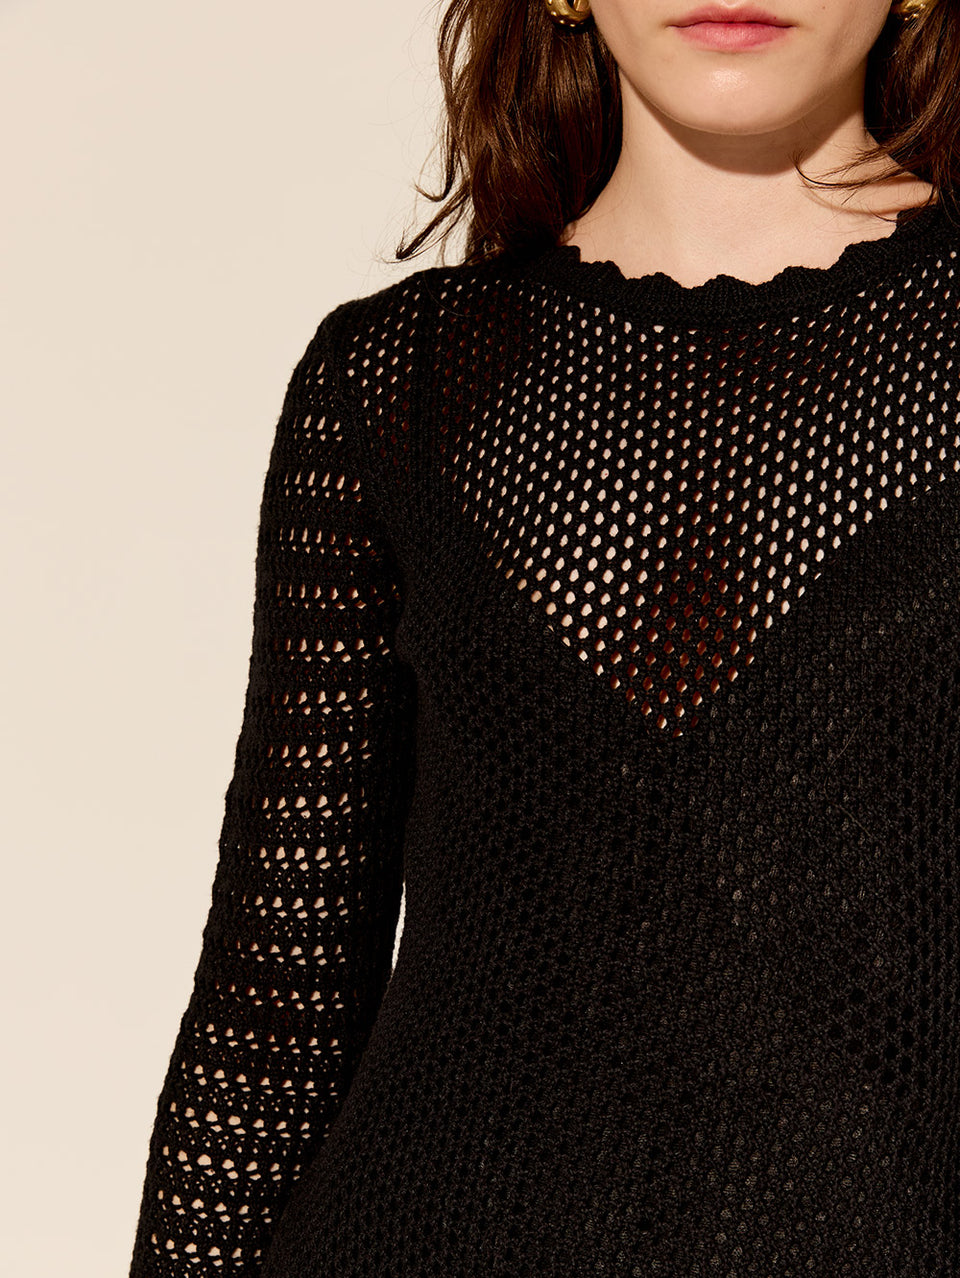 Ingrid Midi Dress Black KIVARI | Model wears black knit midi dress close up